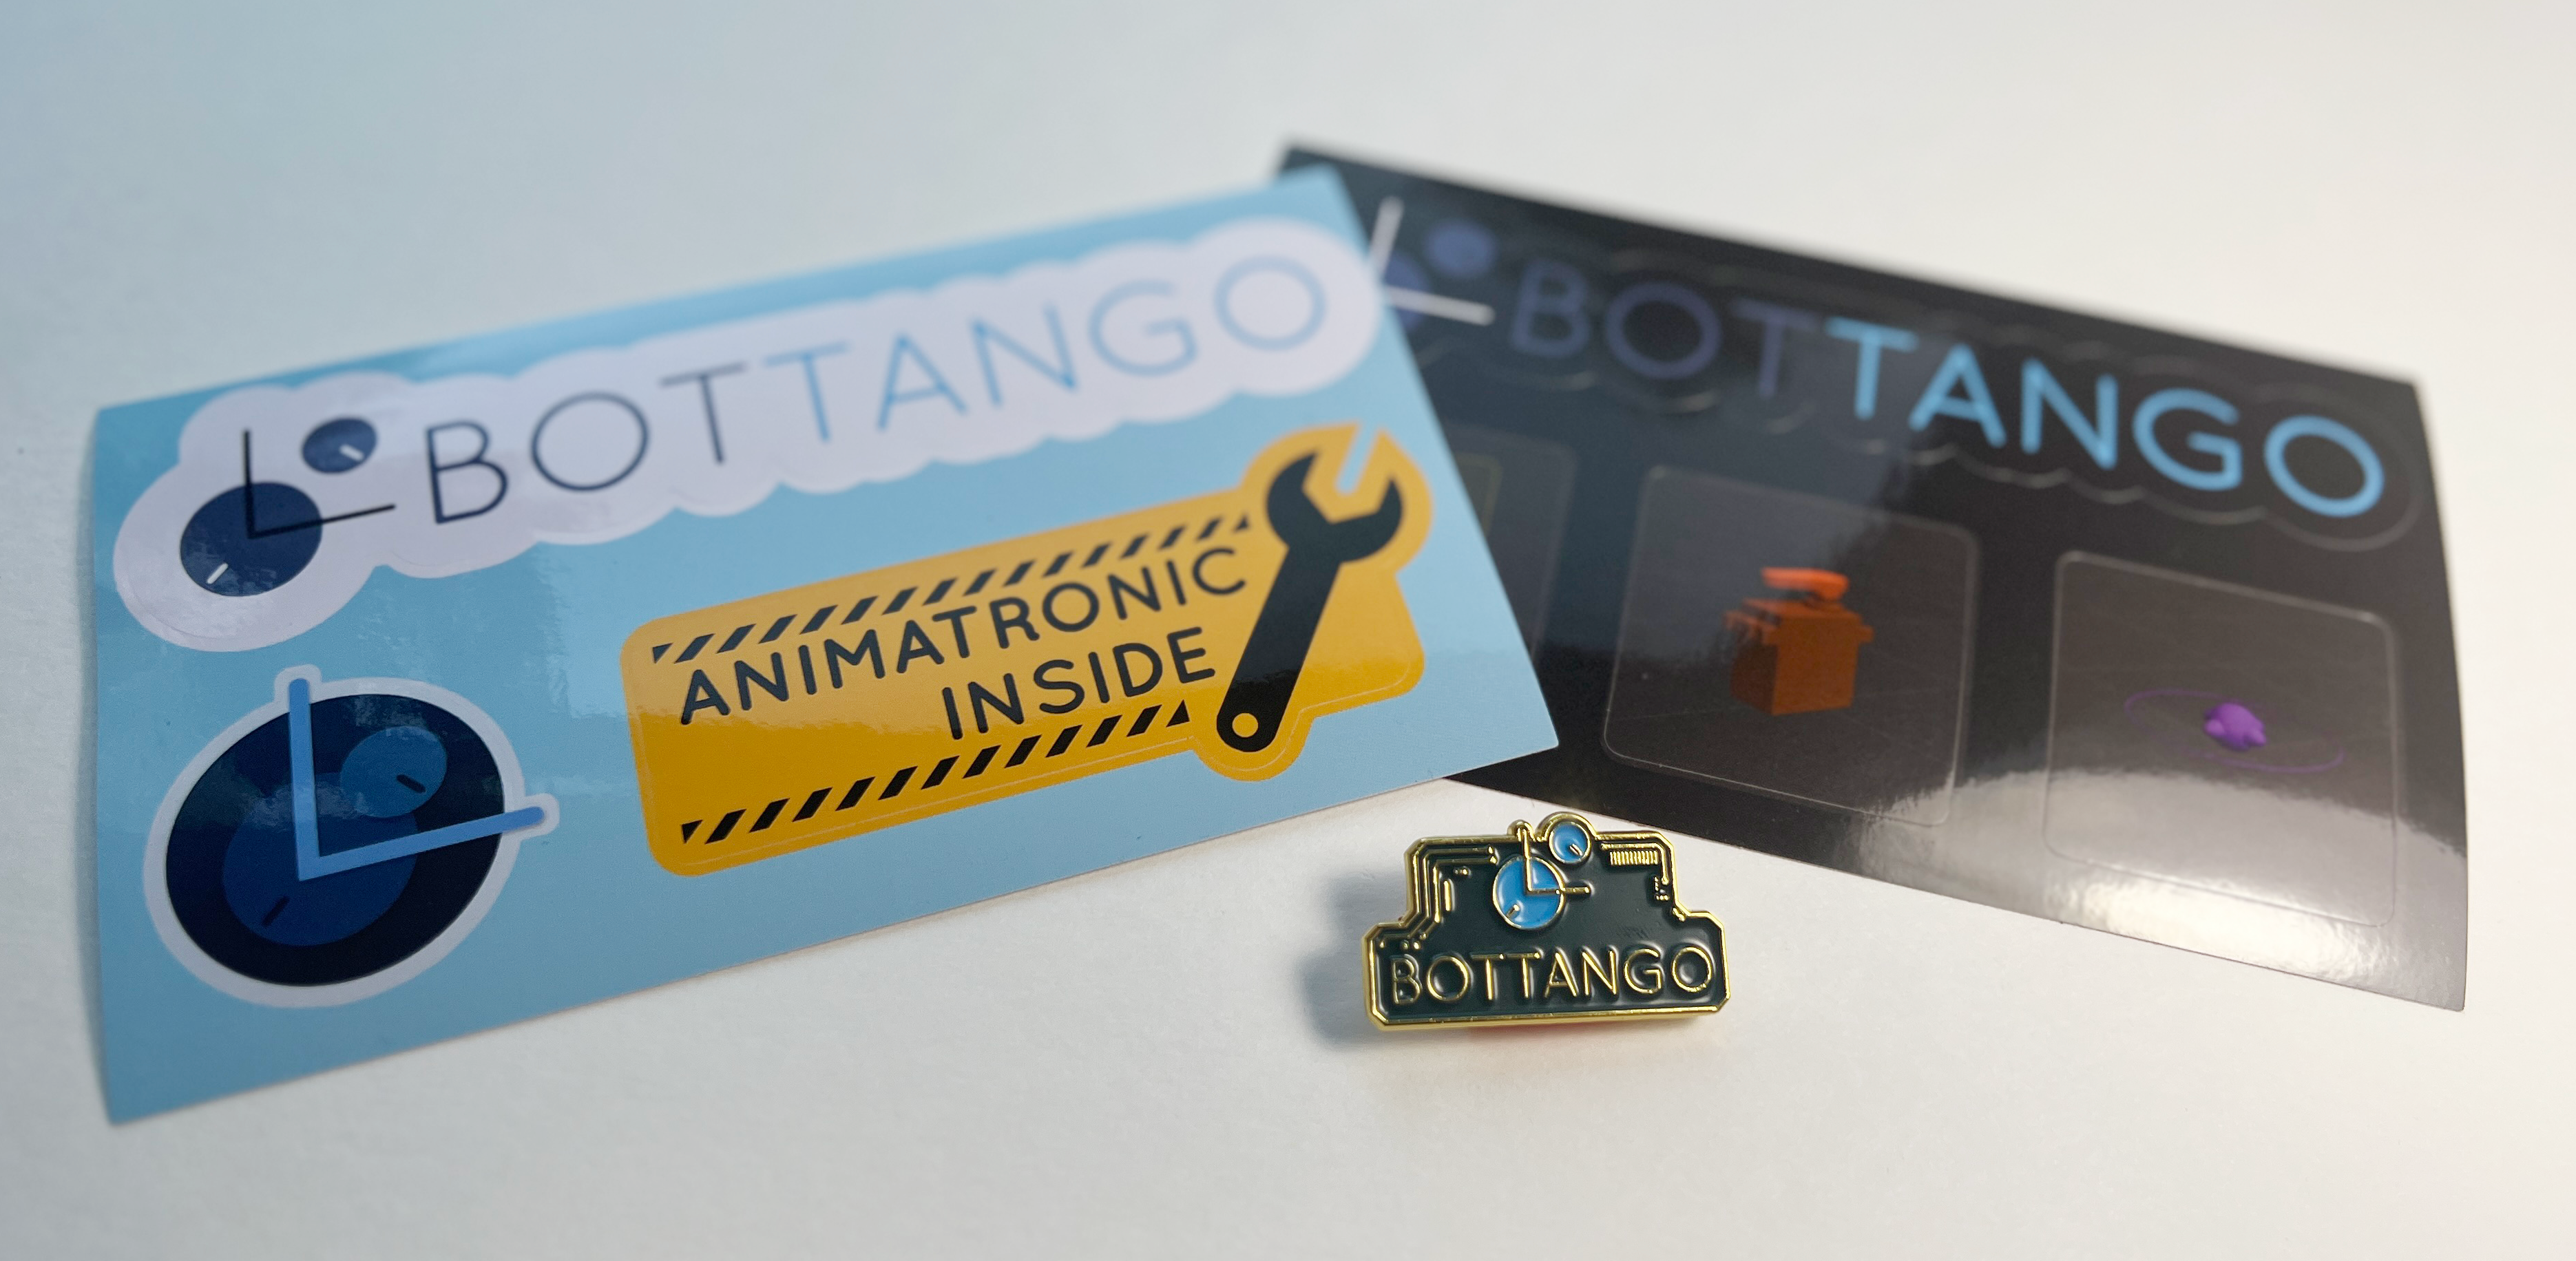 Bottango Merch - Stickers and Pin